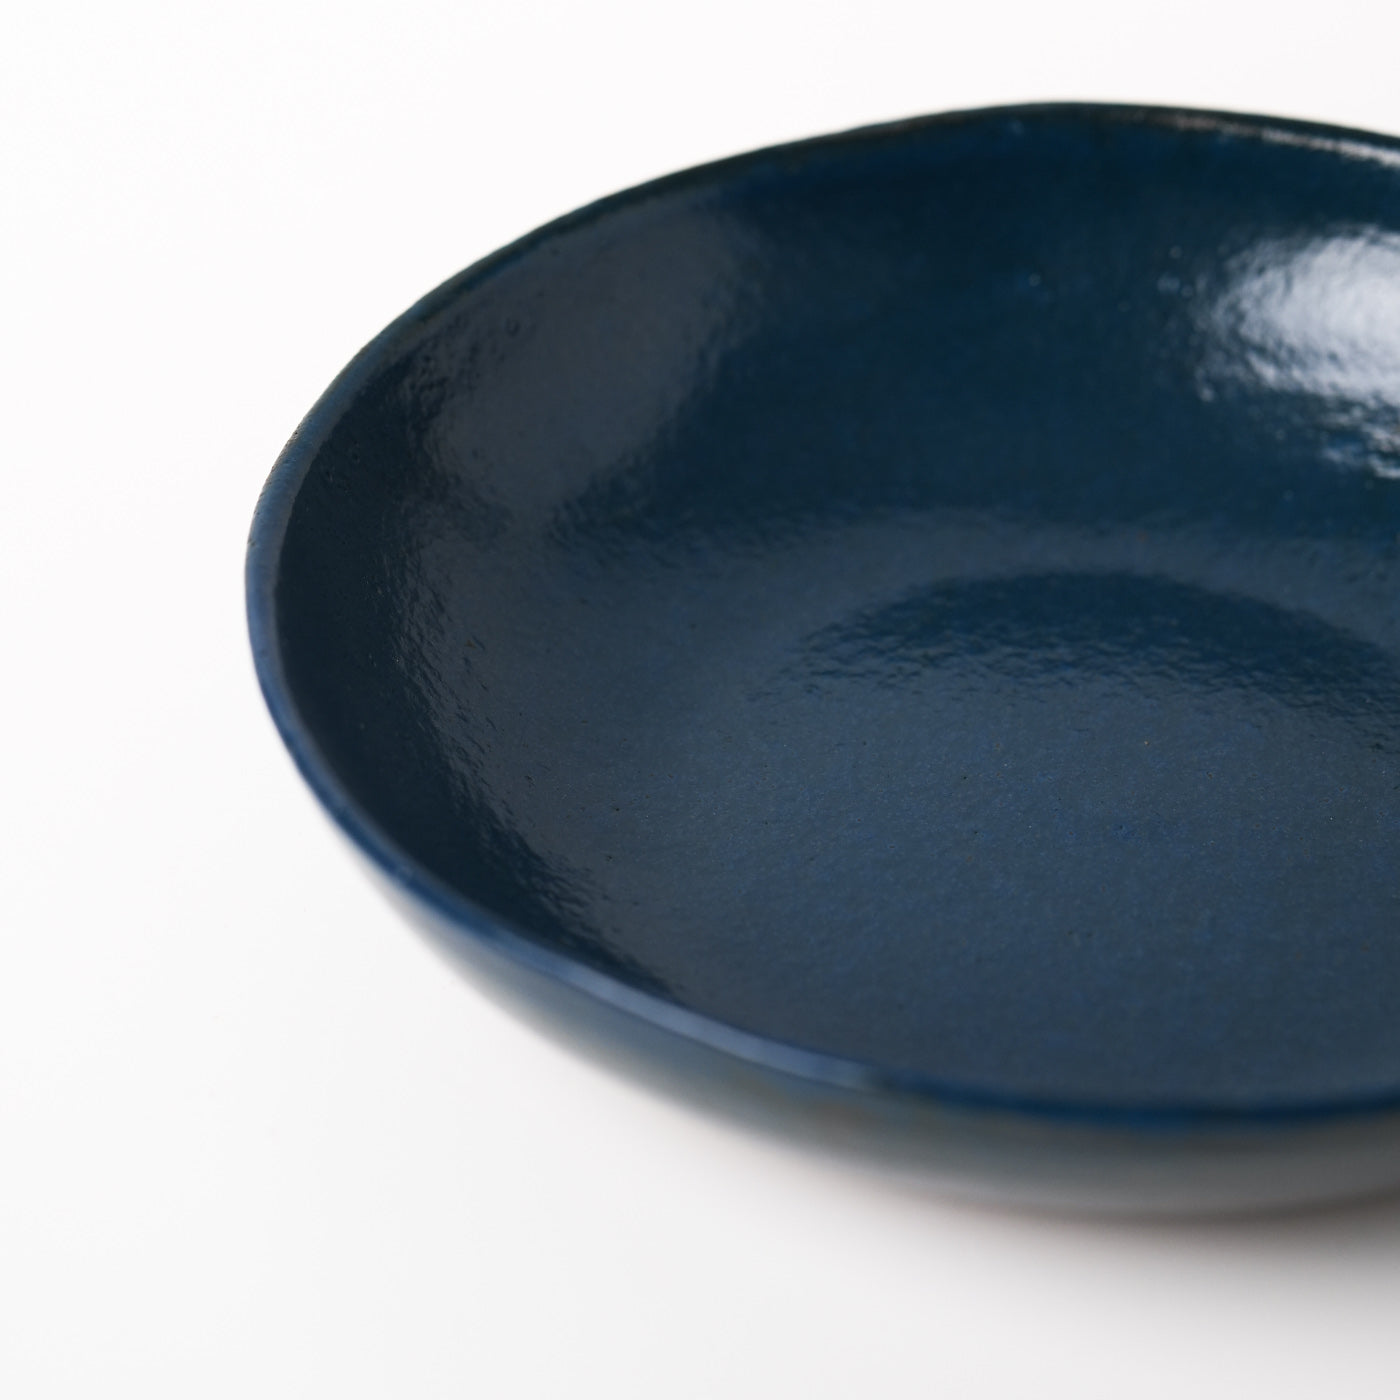 Midnight blue hand thrown ceramic pasta bowl by Gaëlle Le Doledec